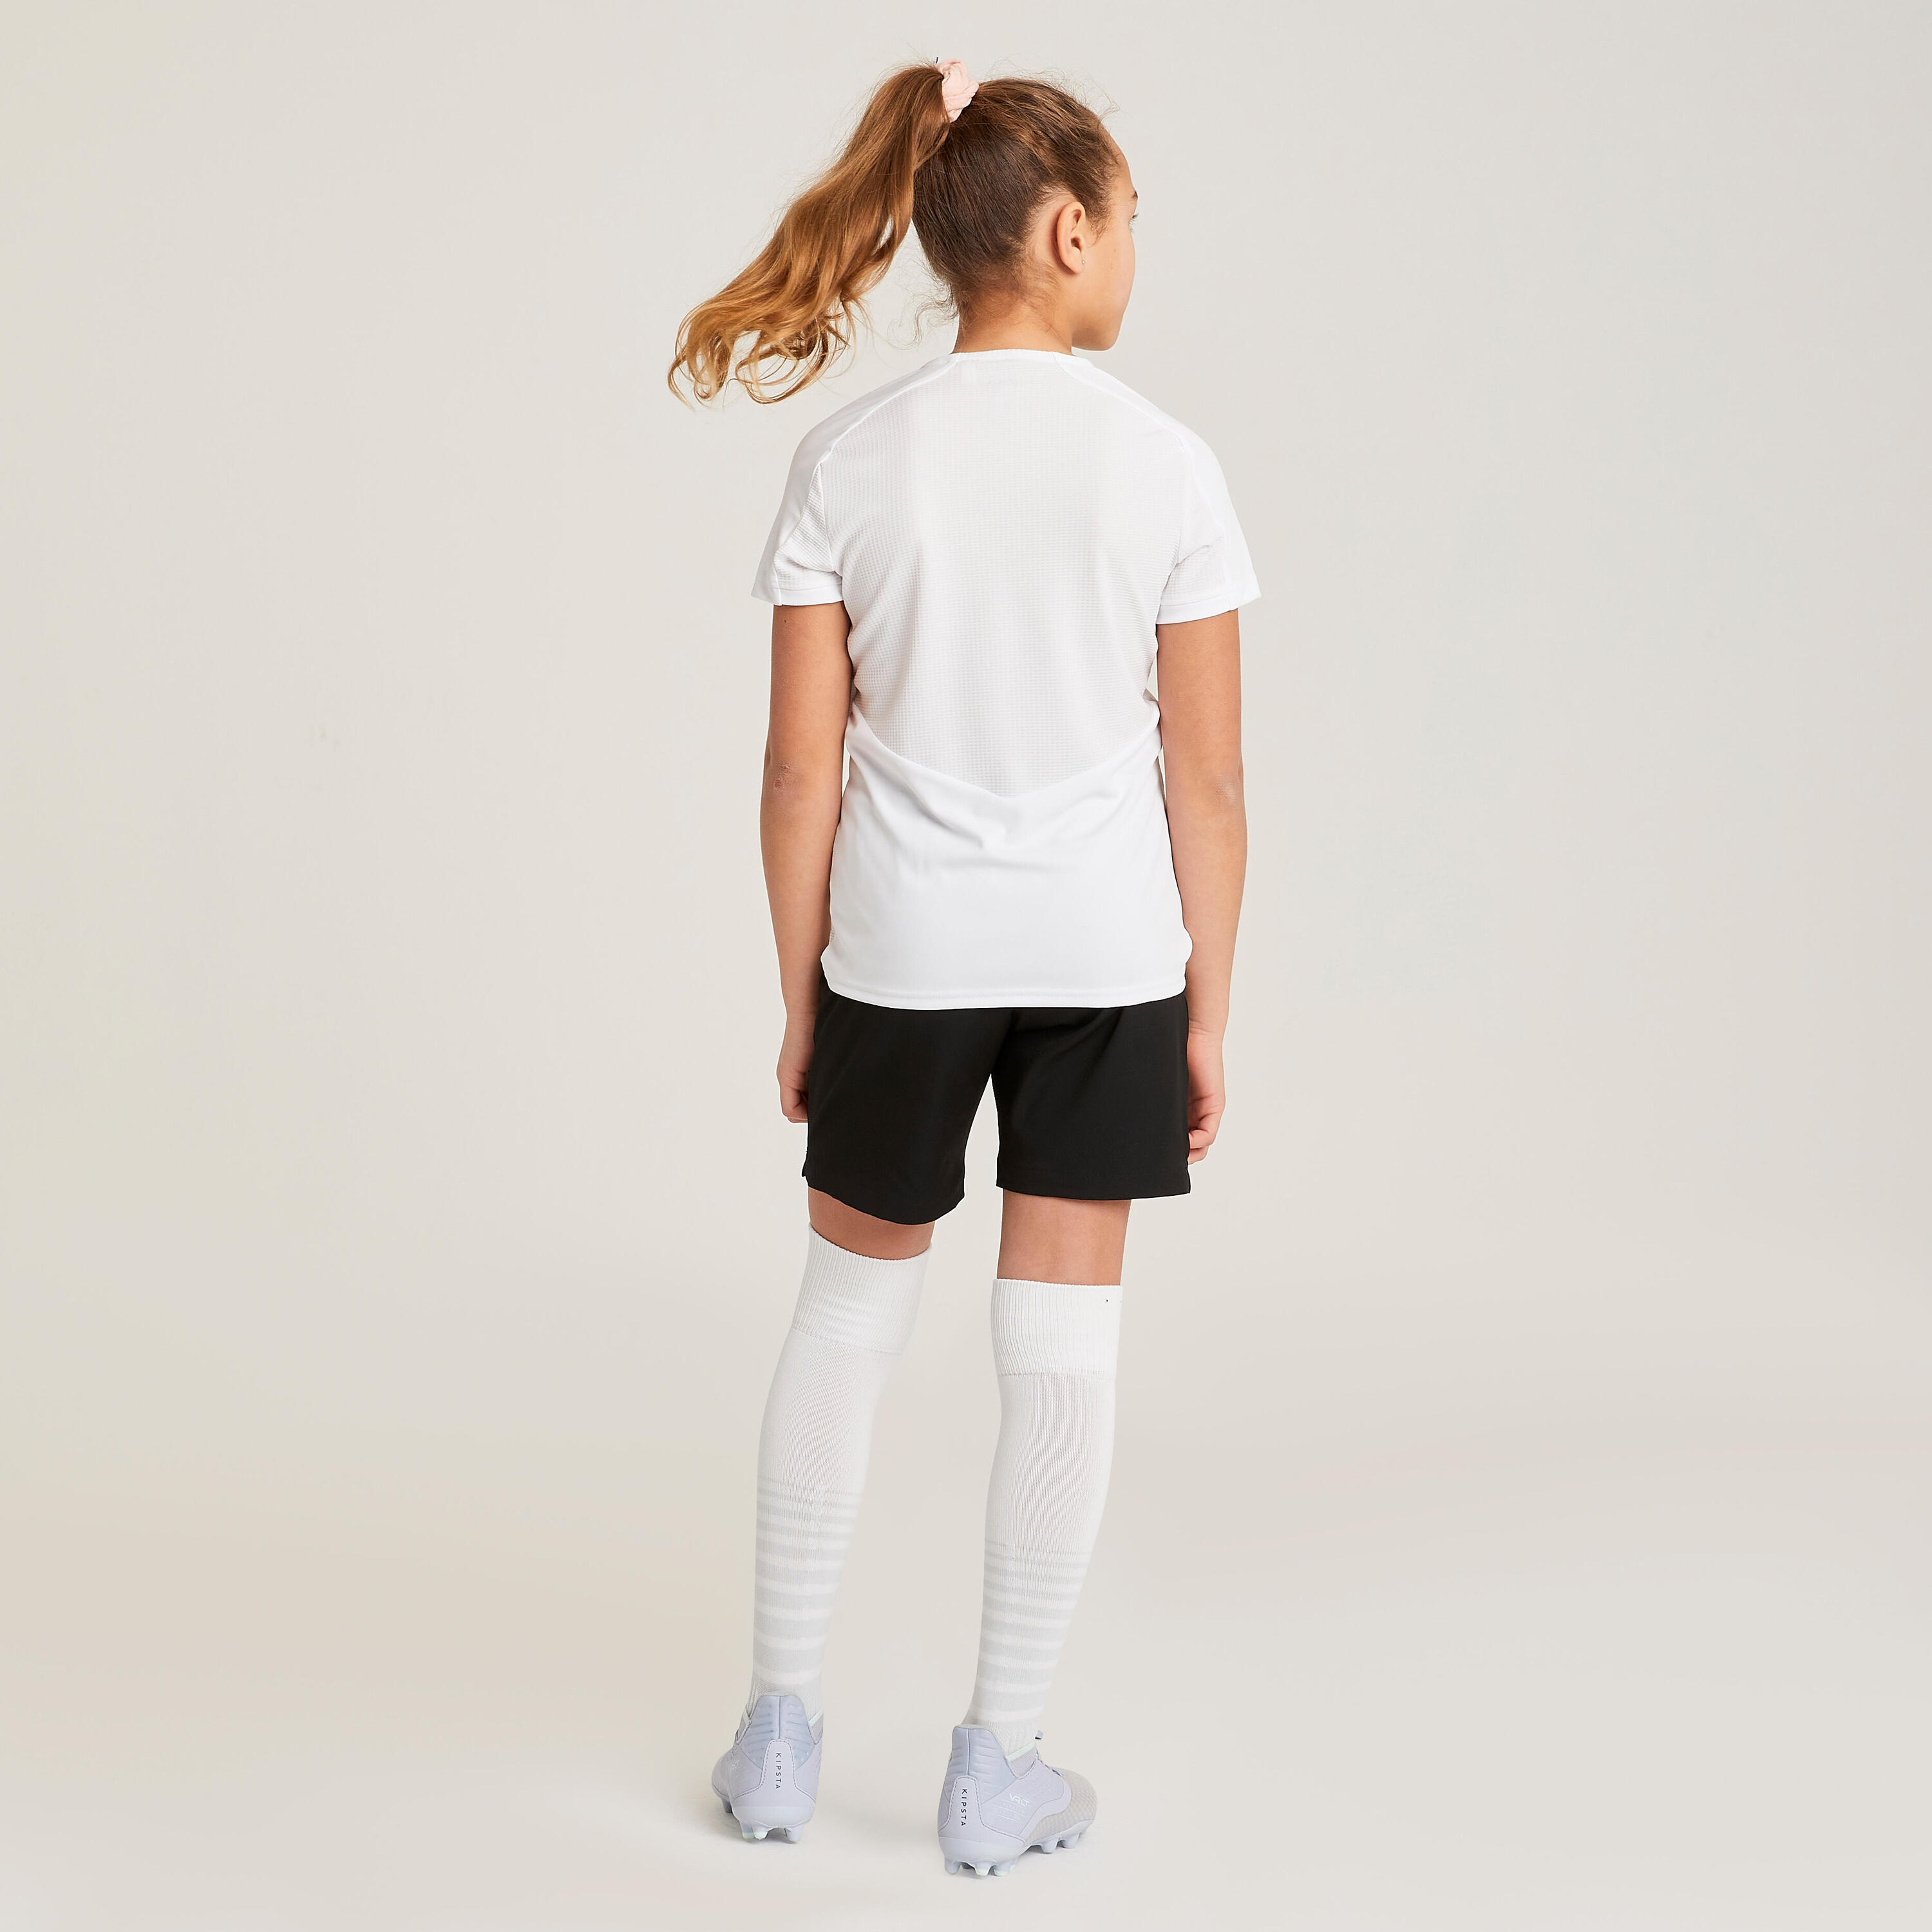 Girls' Football Shirt Viralto - White 8/13